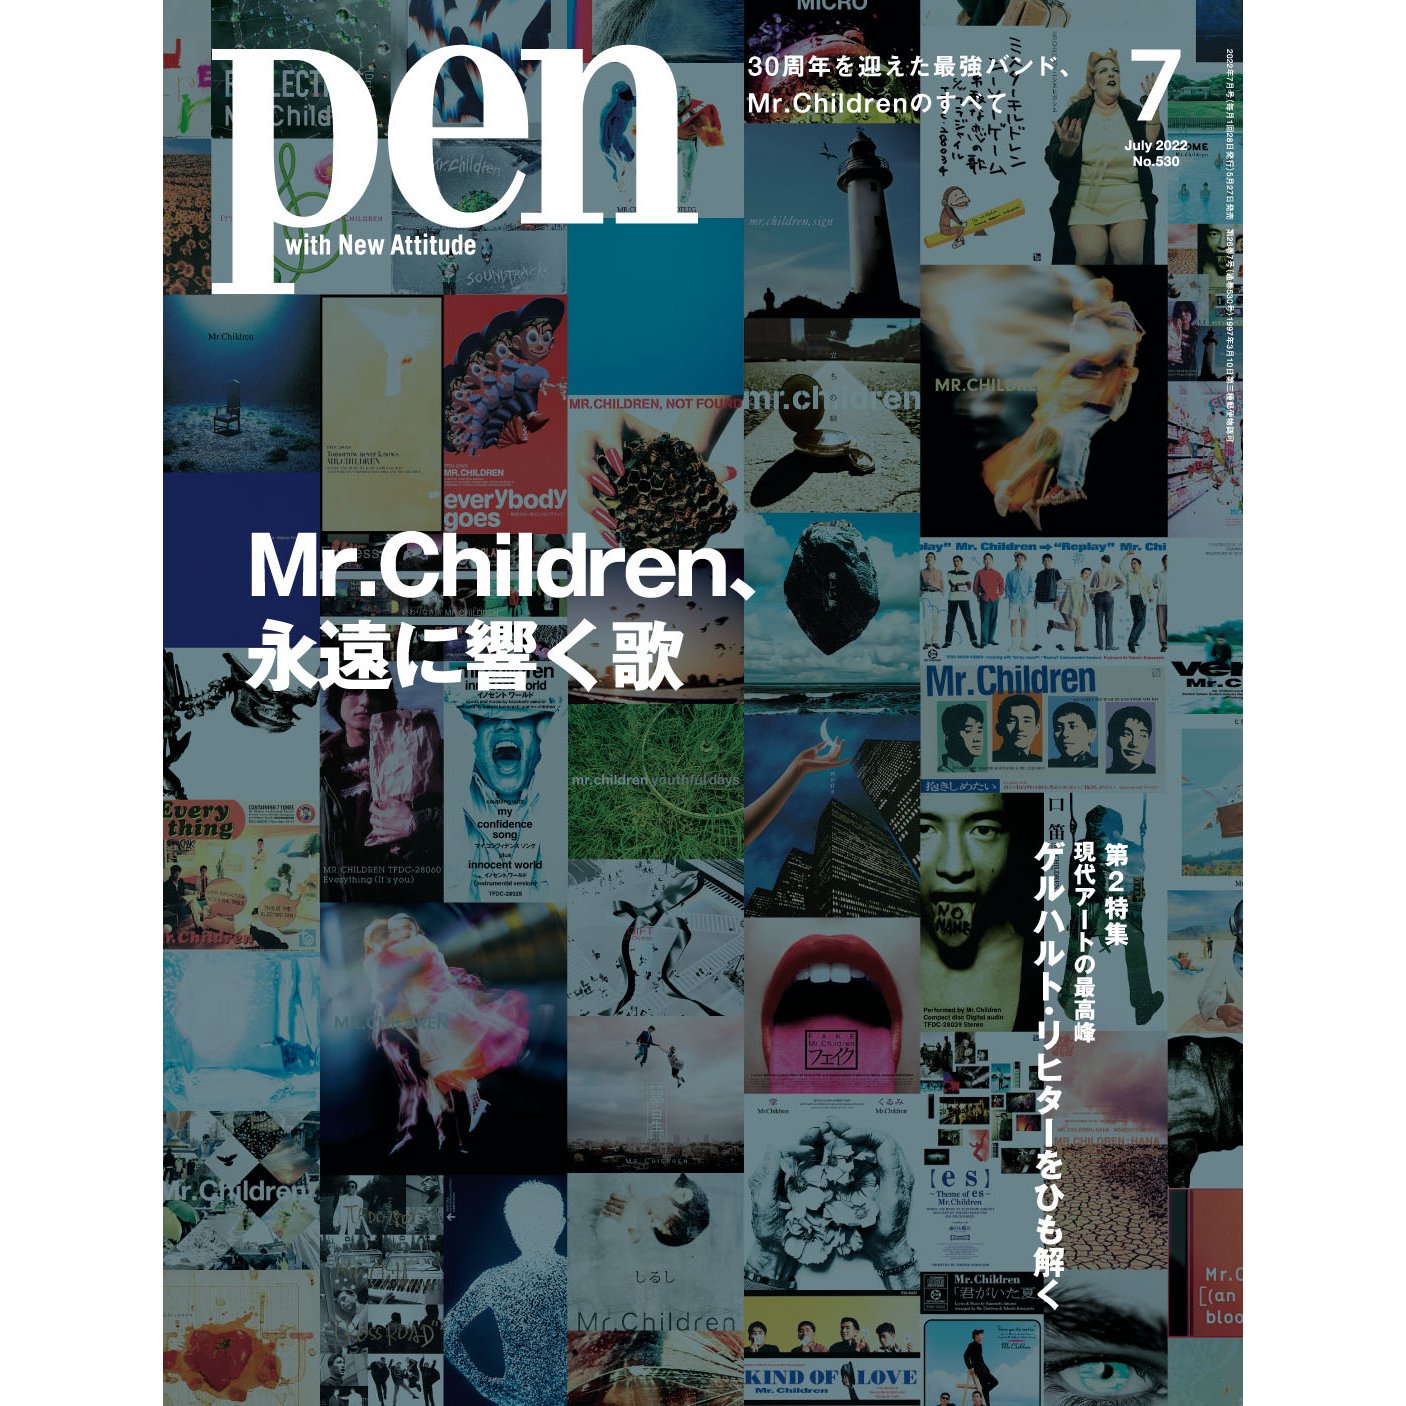 Pen Membershipに新規登録した方に、本日発売の最新号「Mr.Children